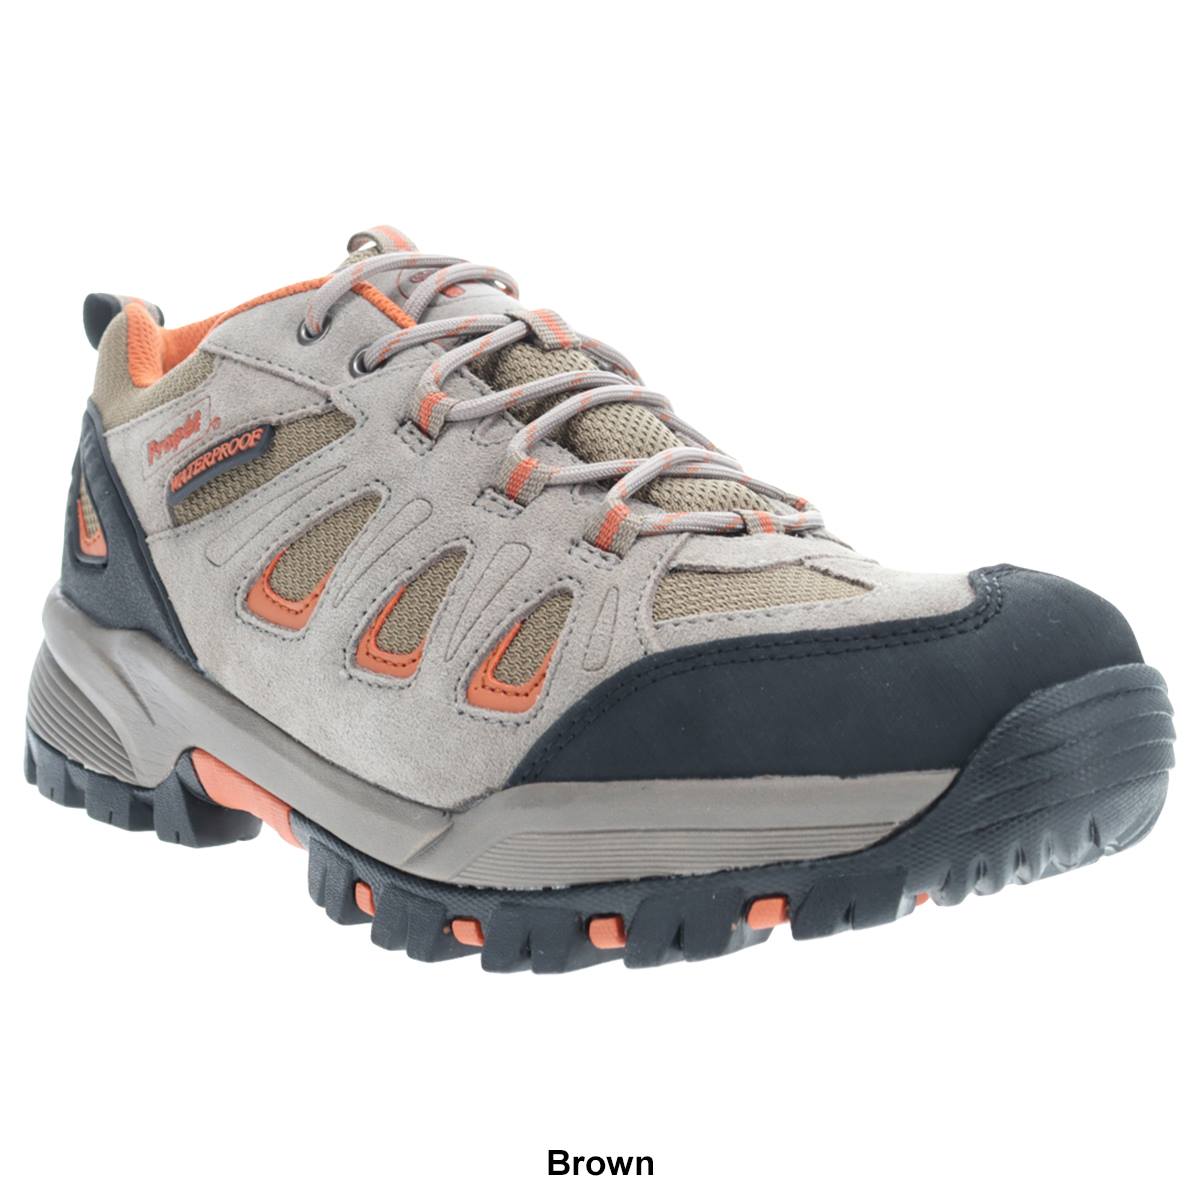 Mens Propet(R) Ridgewalker Low Hiking Shoes